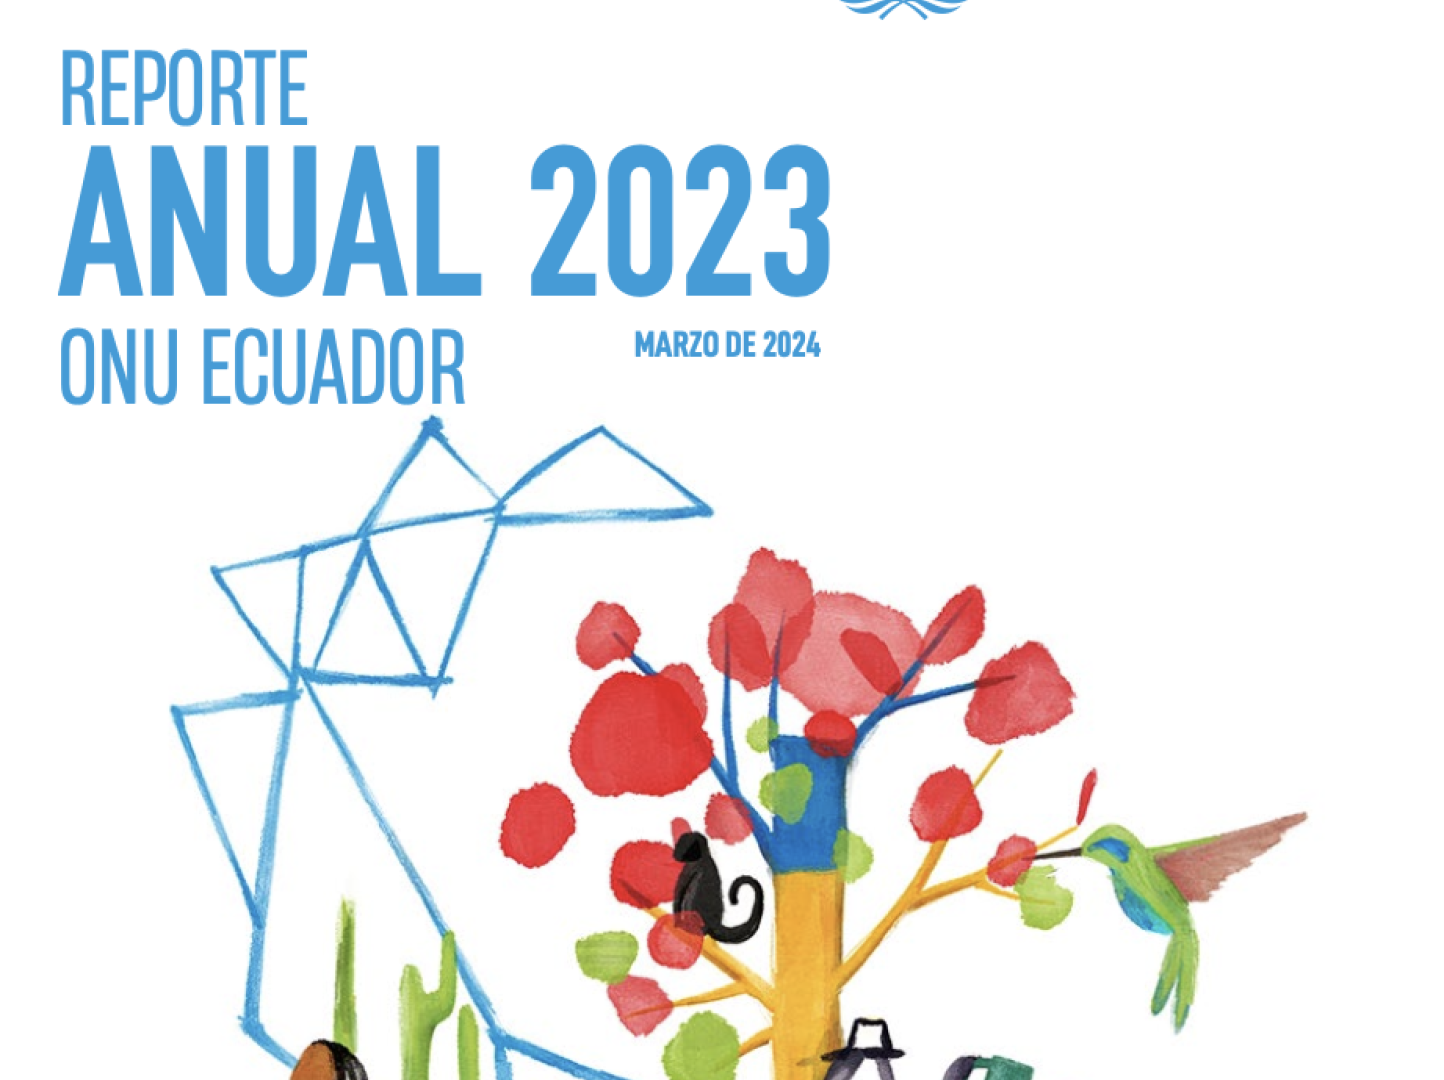 Imagen de la portada del Reporte anual de ONU Ecuador 2023